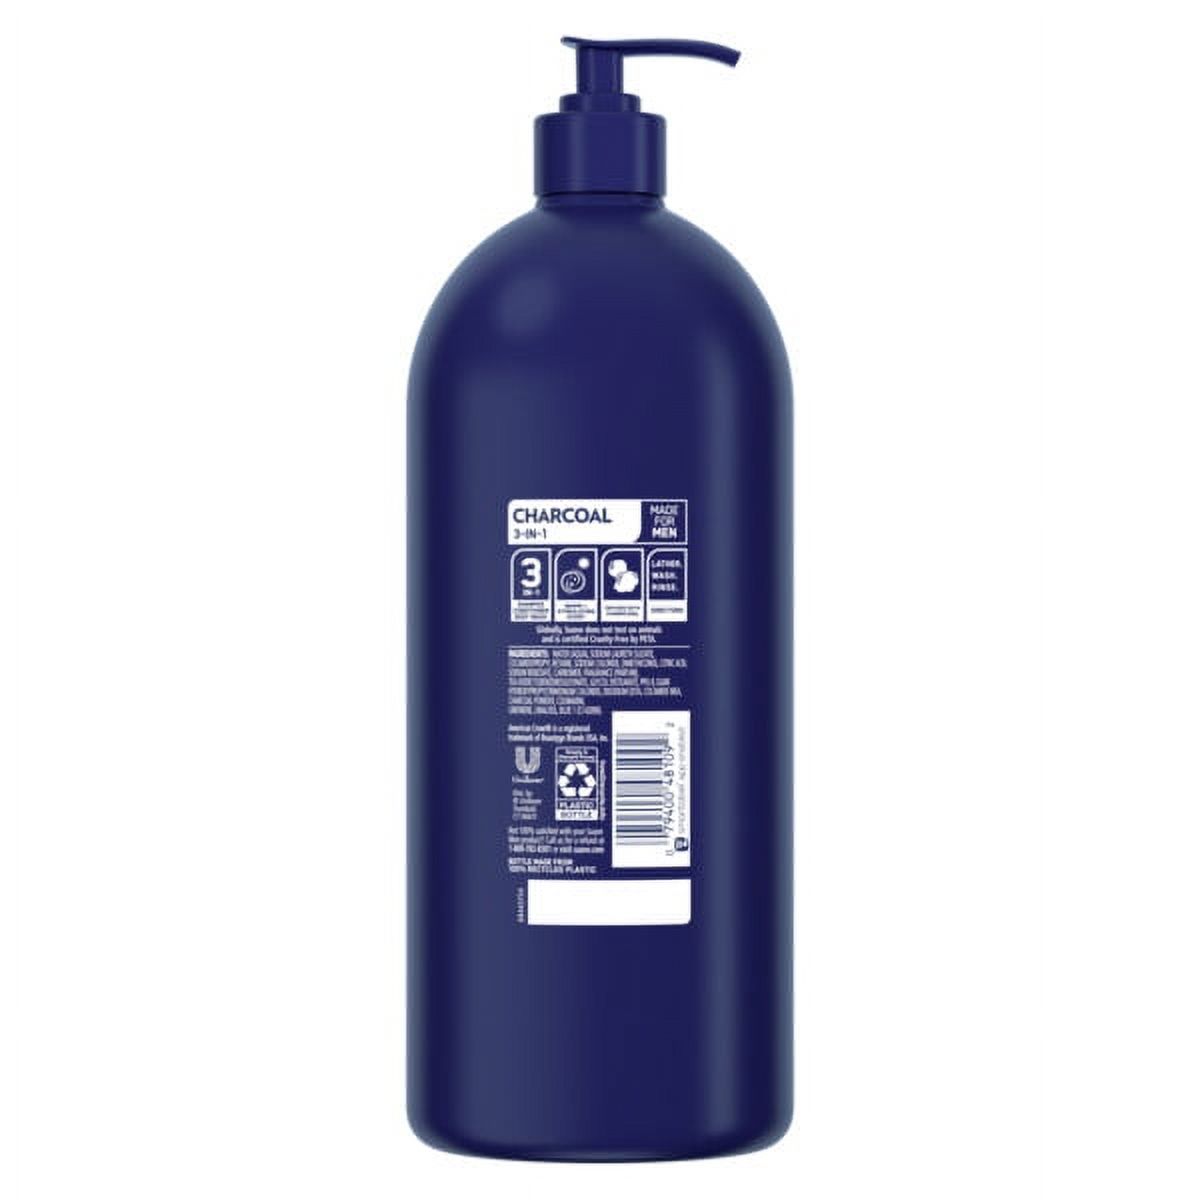 Suave Professionals Men 3-in-1 Shampoo, Conditioner & Body Wash, Charcoal, 40 fl oz - image 2 of 8